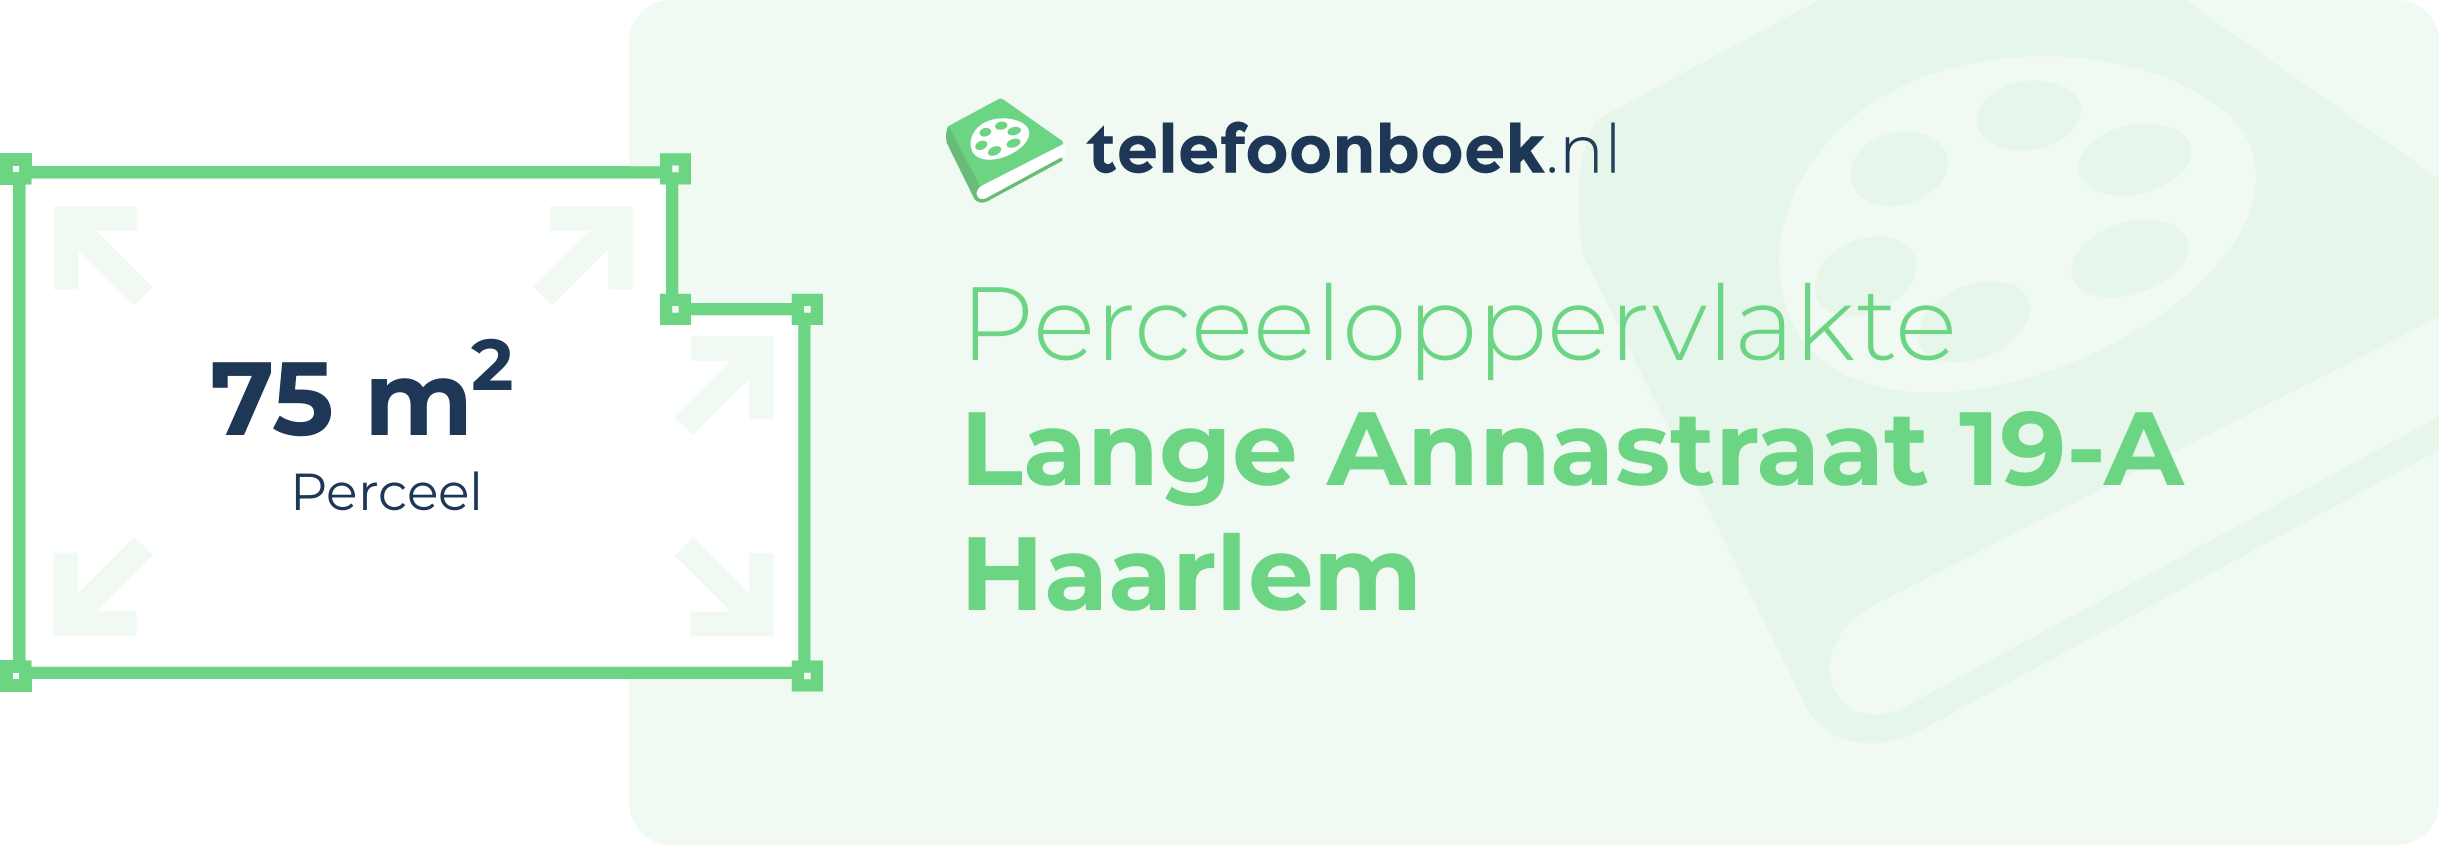 Perceeloppervlakte Lange Annastraat 19-A Haarlem